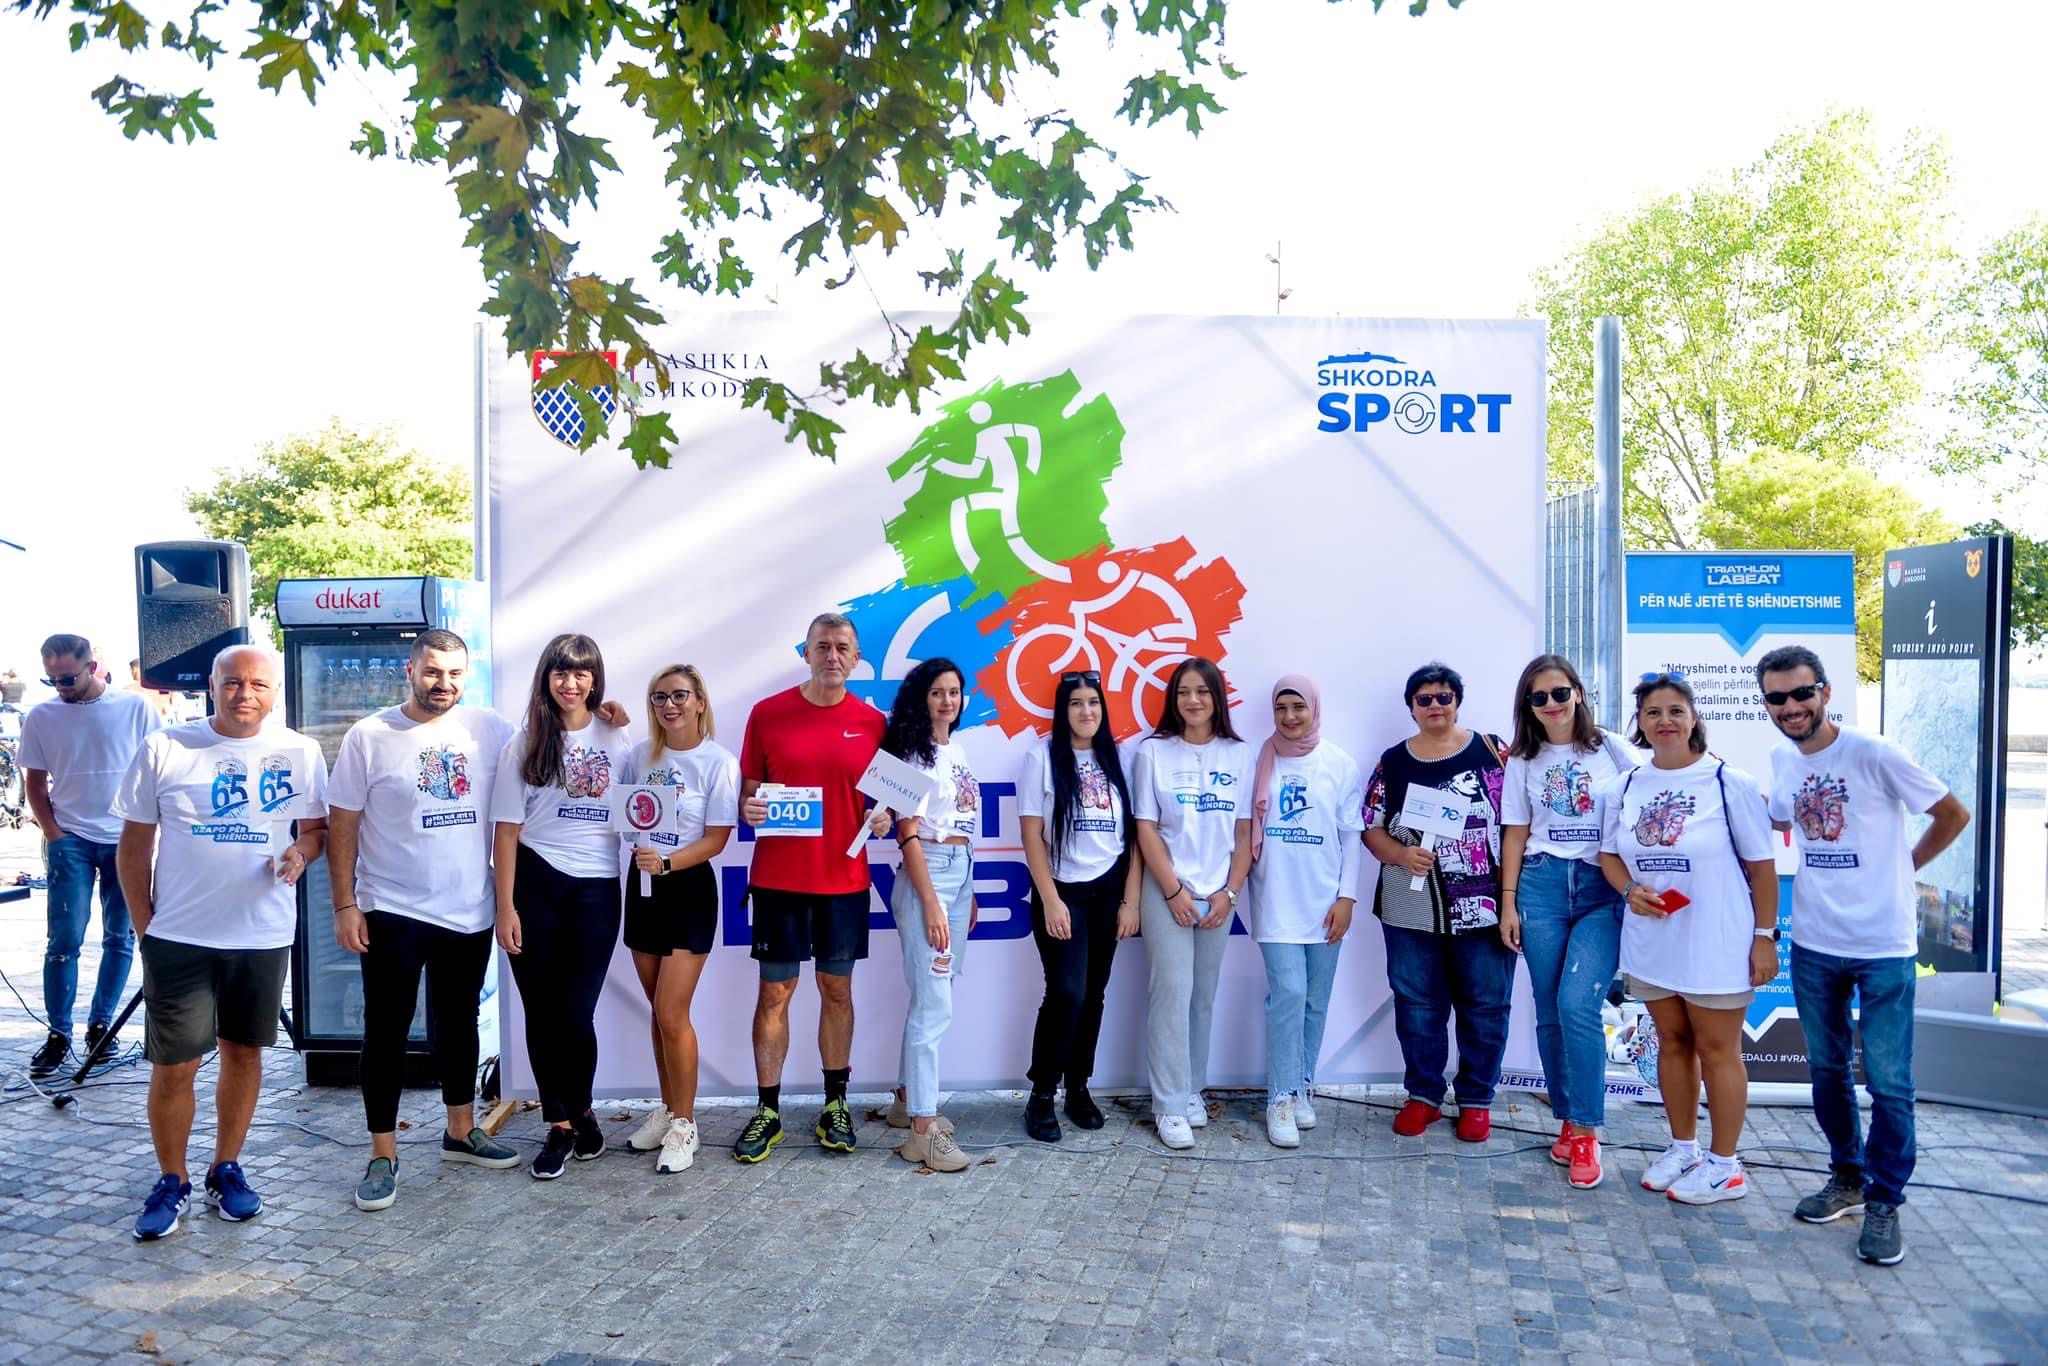 Triathlon Labeat “For a healthy Life” – Heart Disease Awareness campaign, Shkodër, Albania